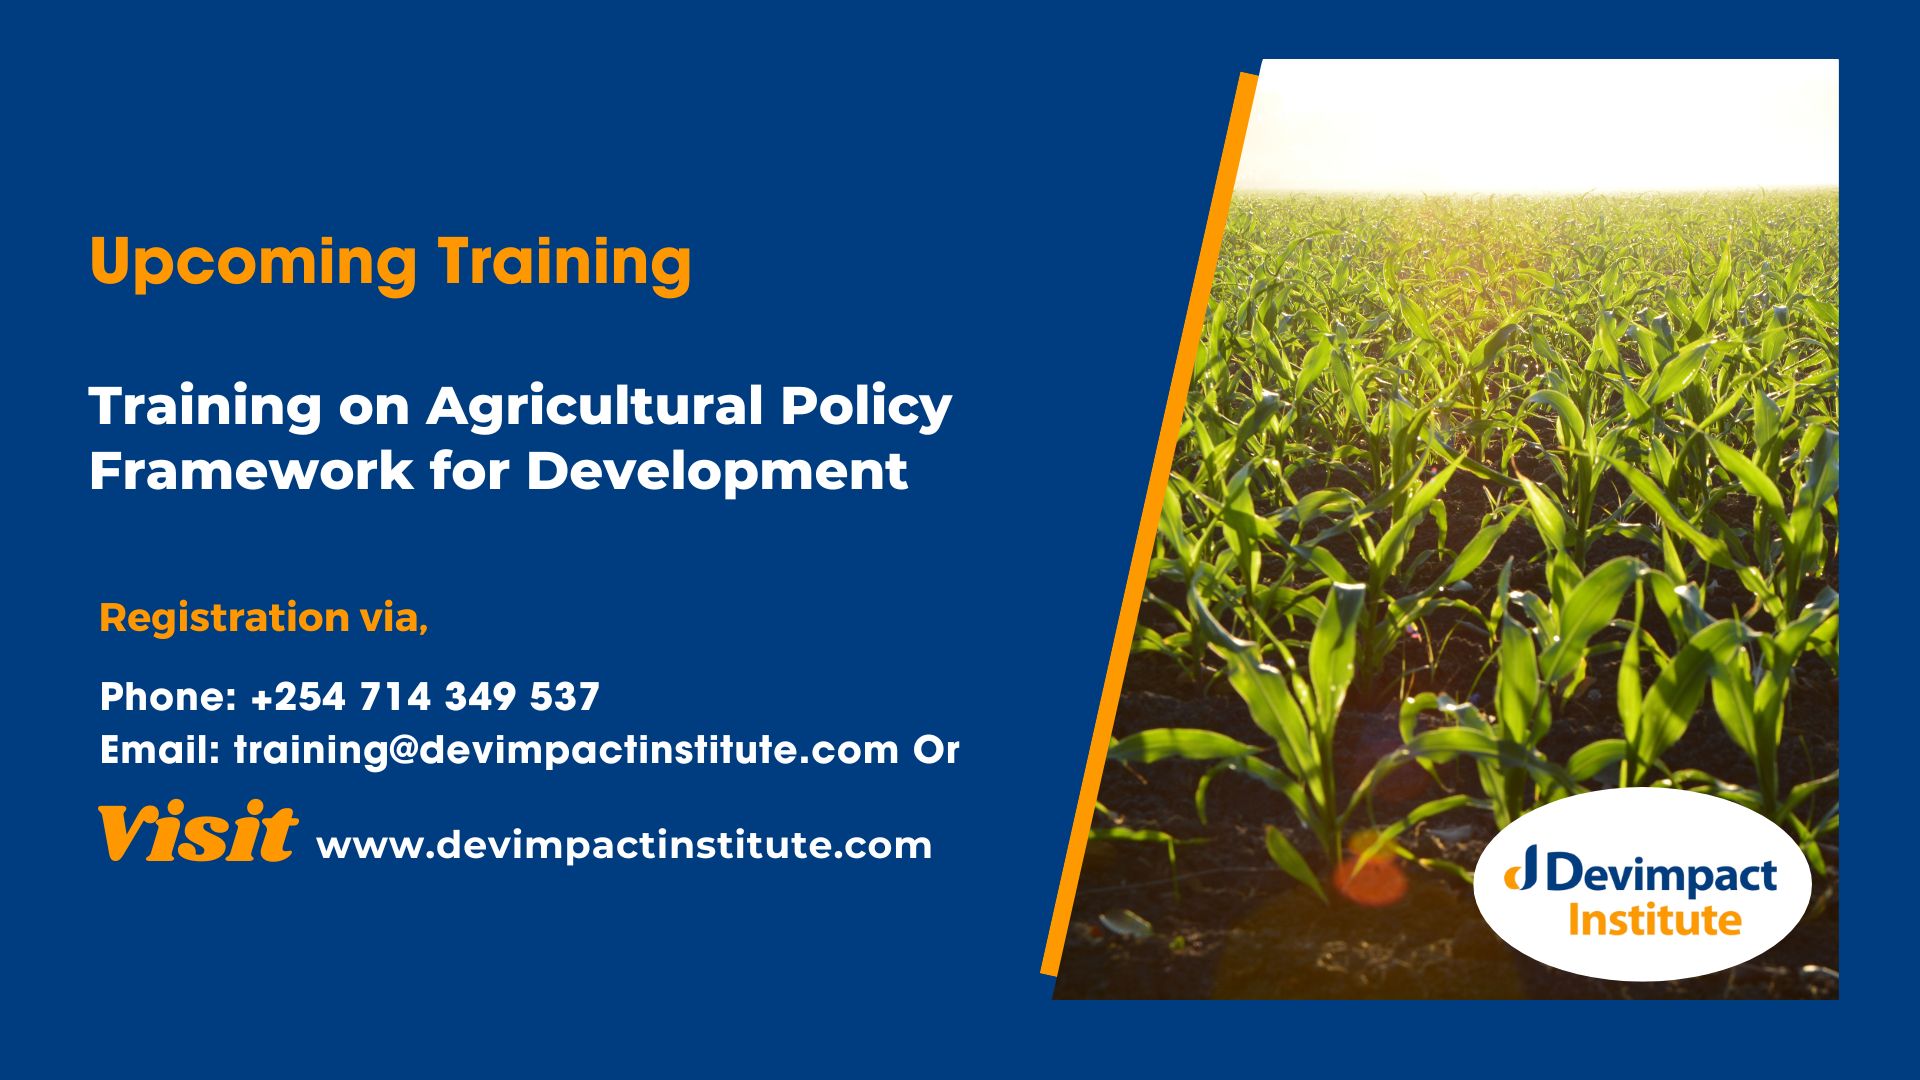 Training on Agricultural Policy Framework for Development, Devimpact Institute, Nairobi, Kenya